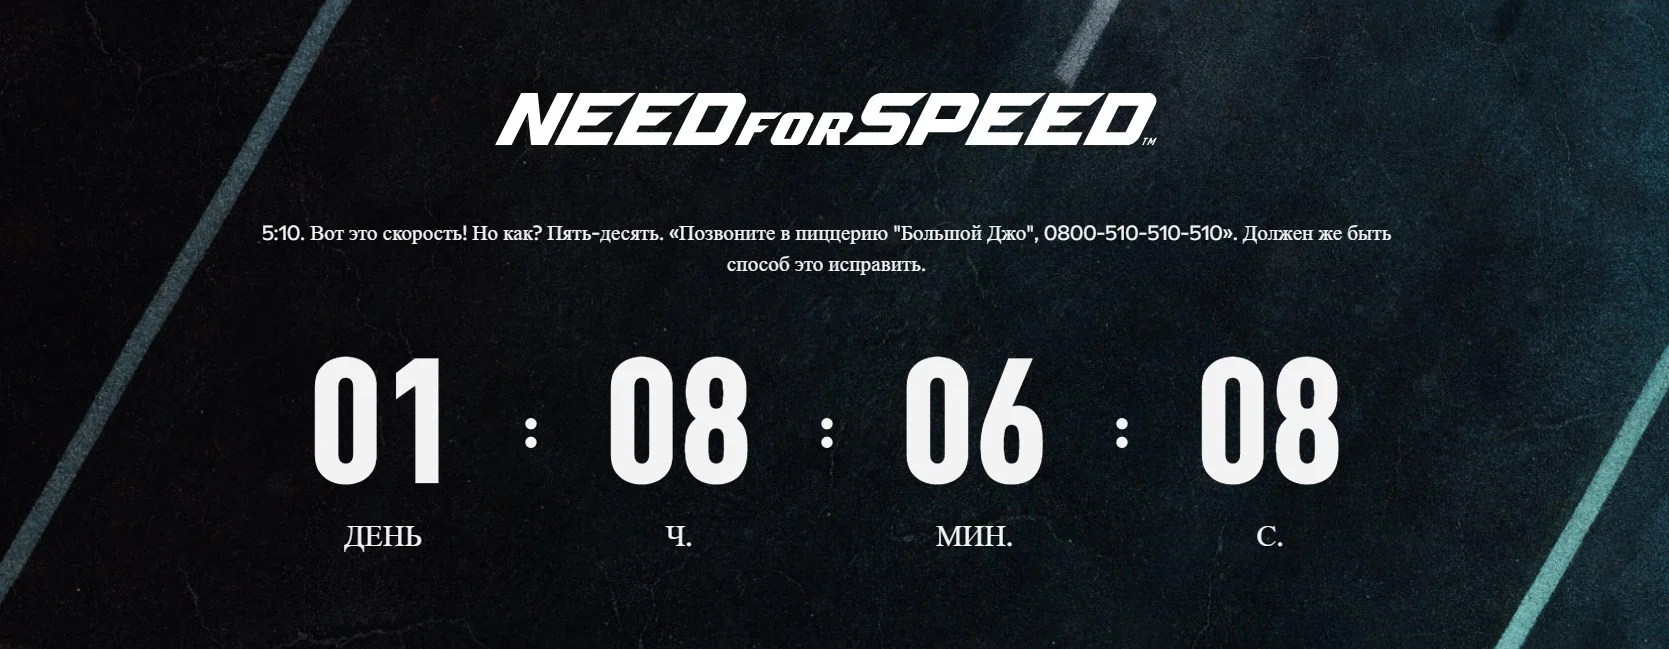 Утечка: скриншоты, дата выхода и детали ремастера Need for Speed Hot Pursuit - фото 5